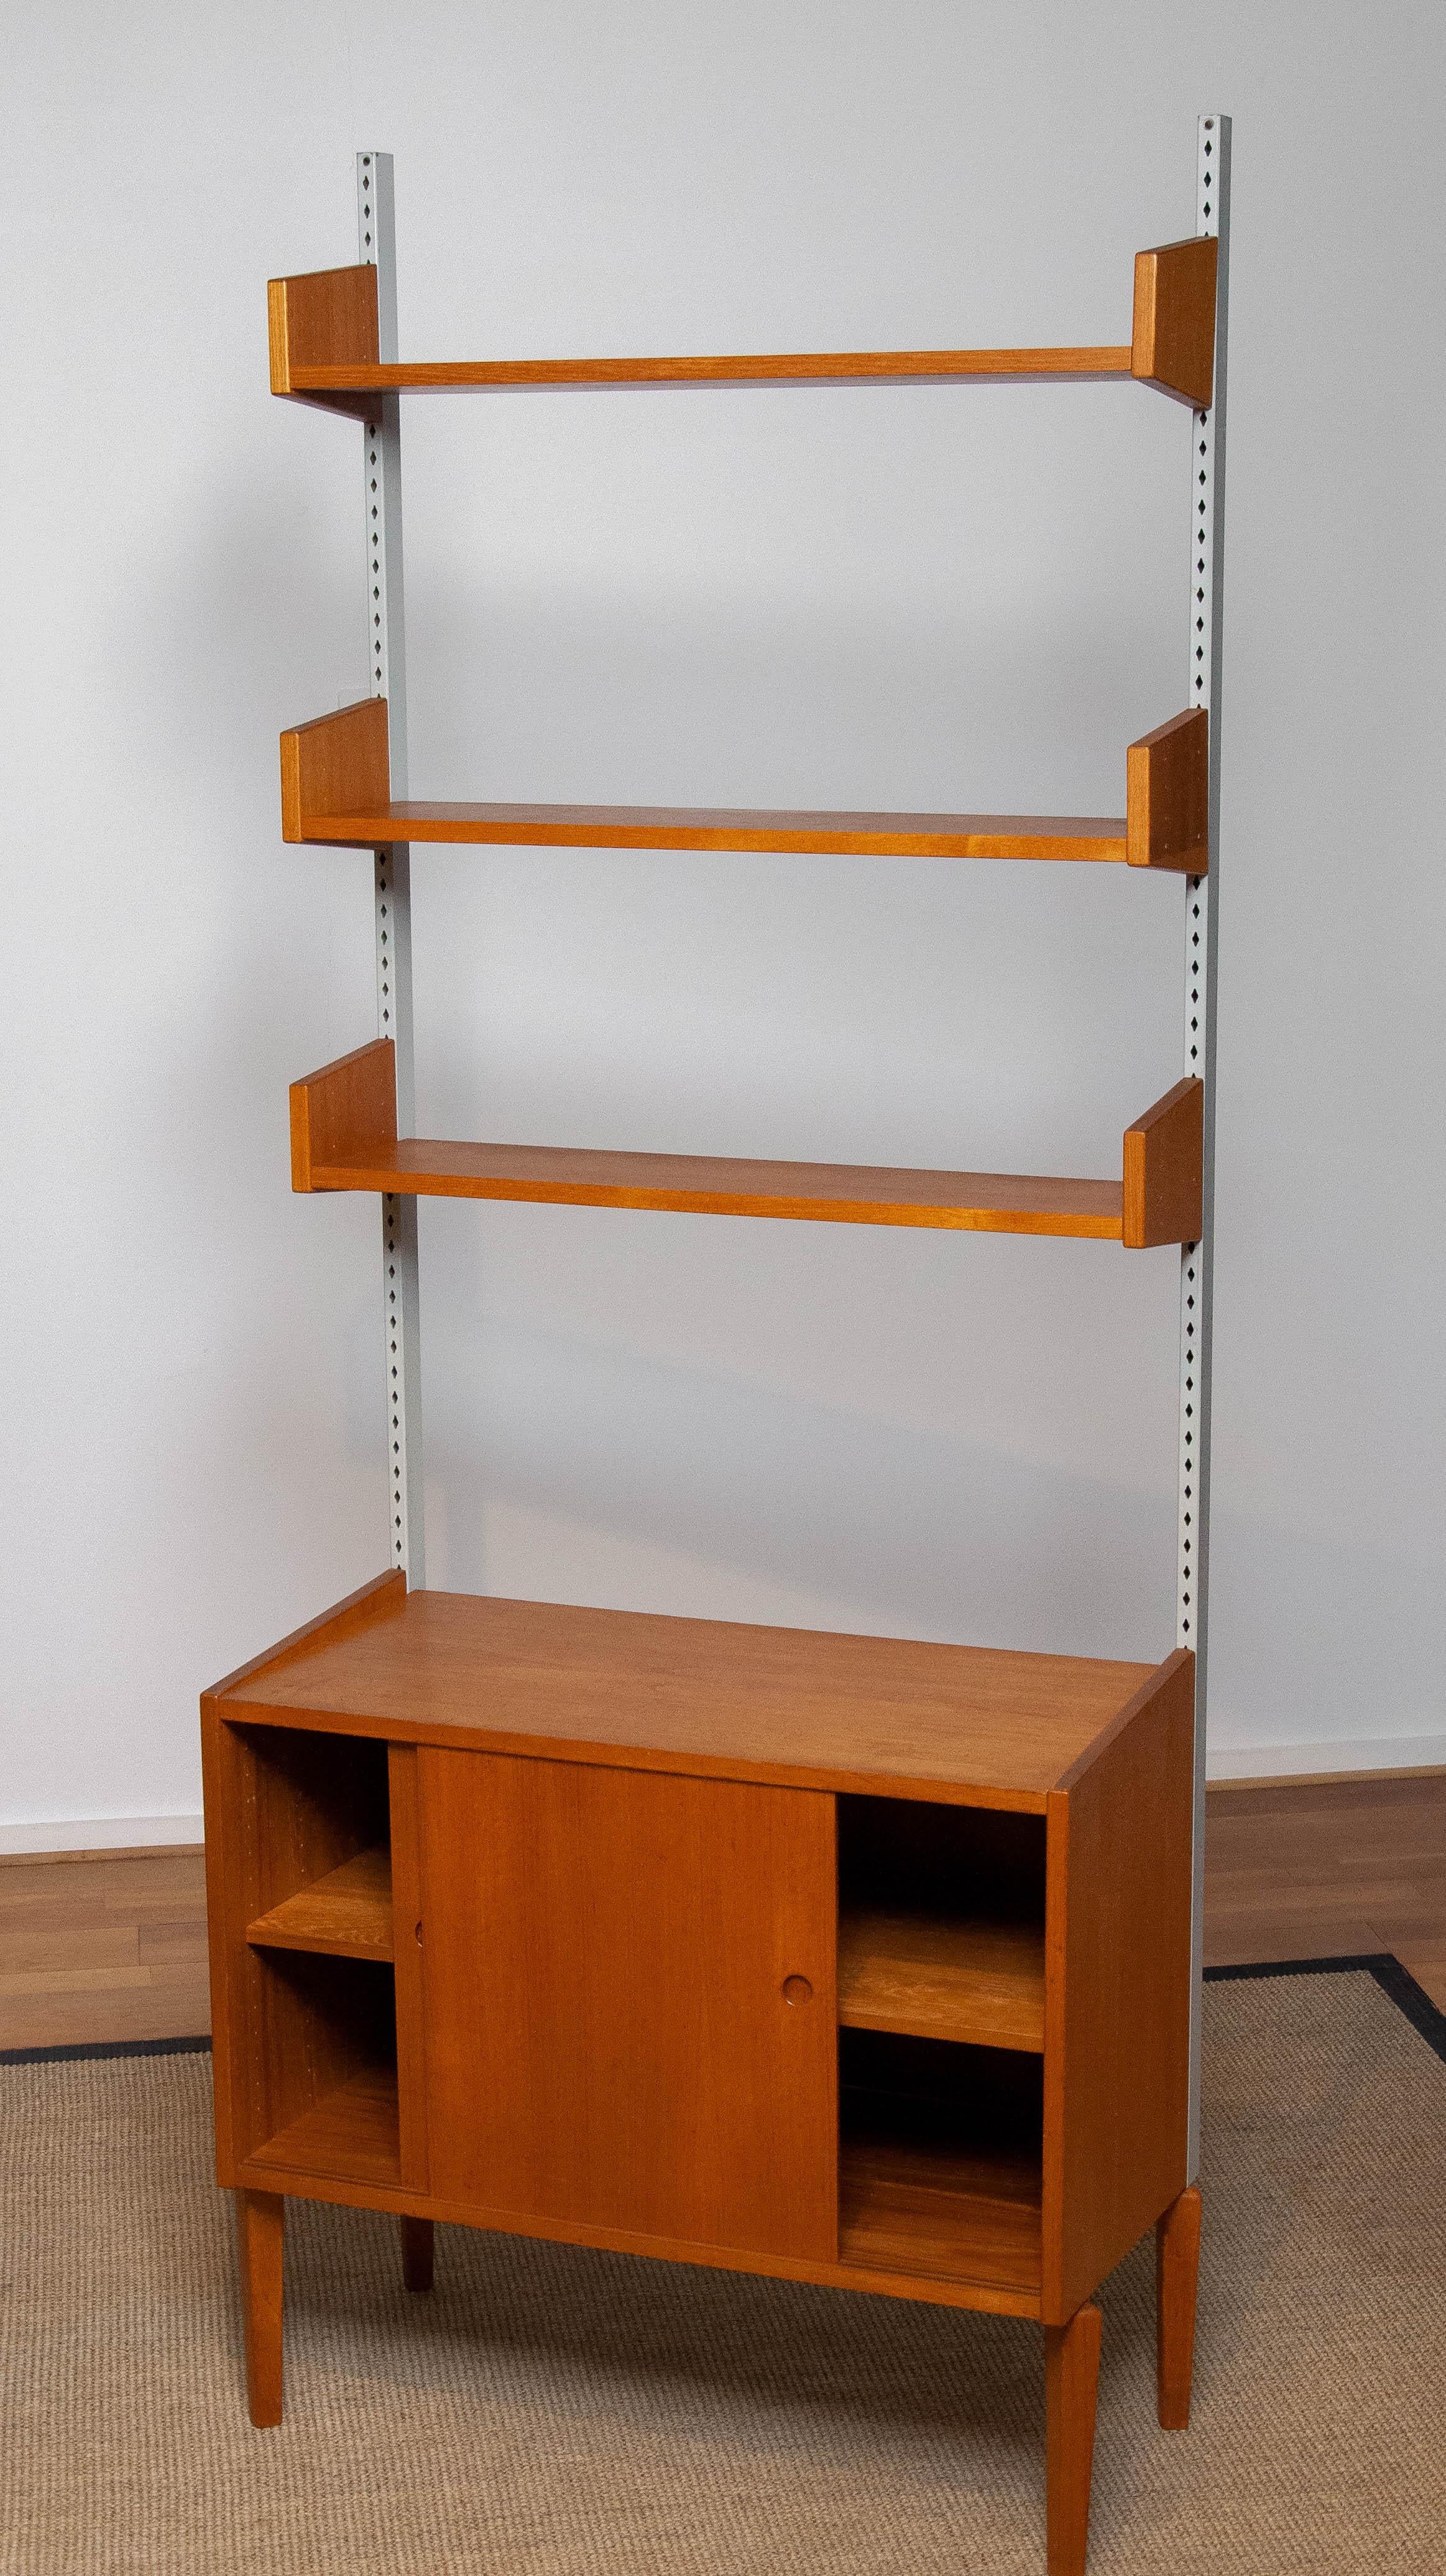 1950's Teak Shelf System / Bookcase in Teak with Steel Bars by Harald Lundqvist In Good Condition For Sale In Silvolde, Gelderland